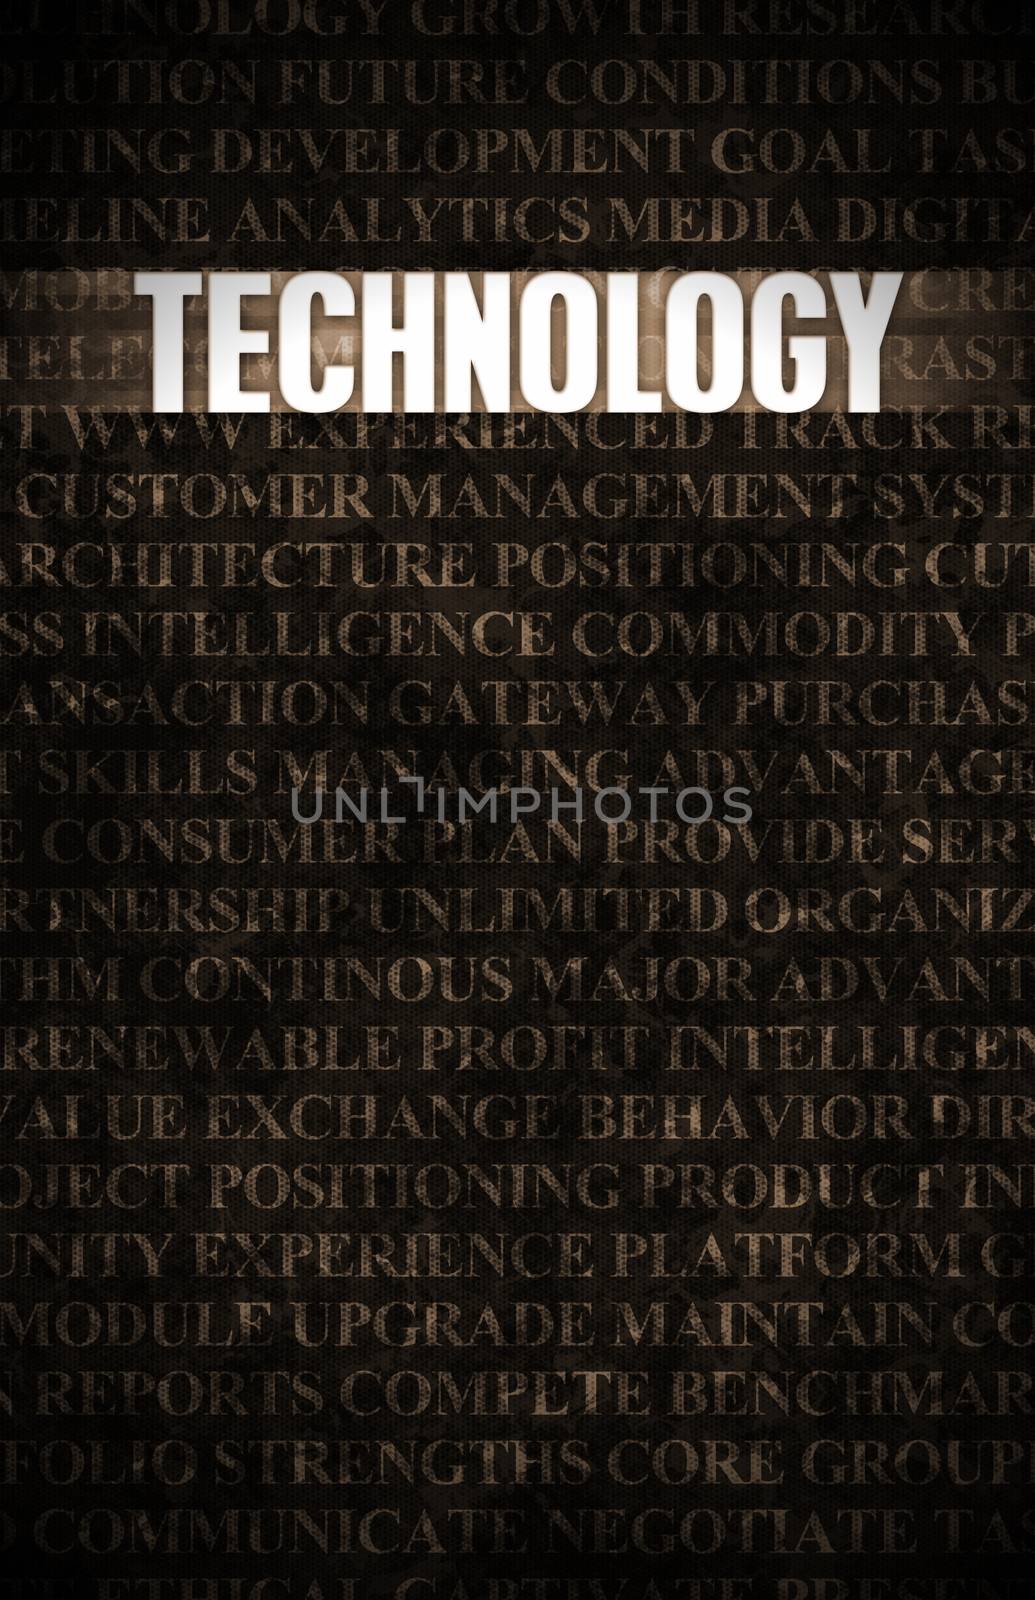 Technology by kentoh